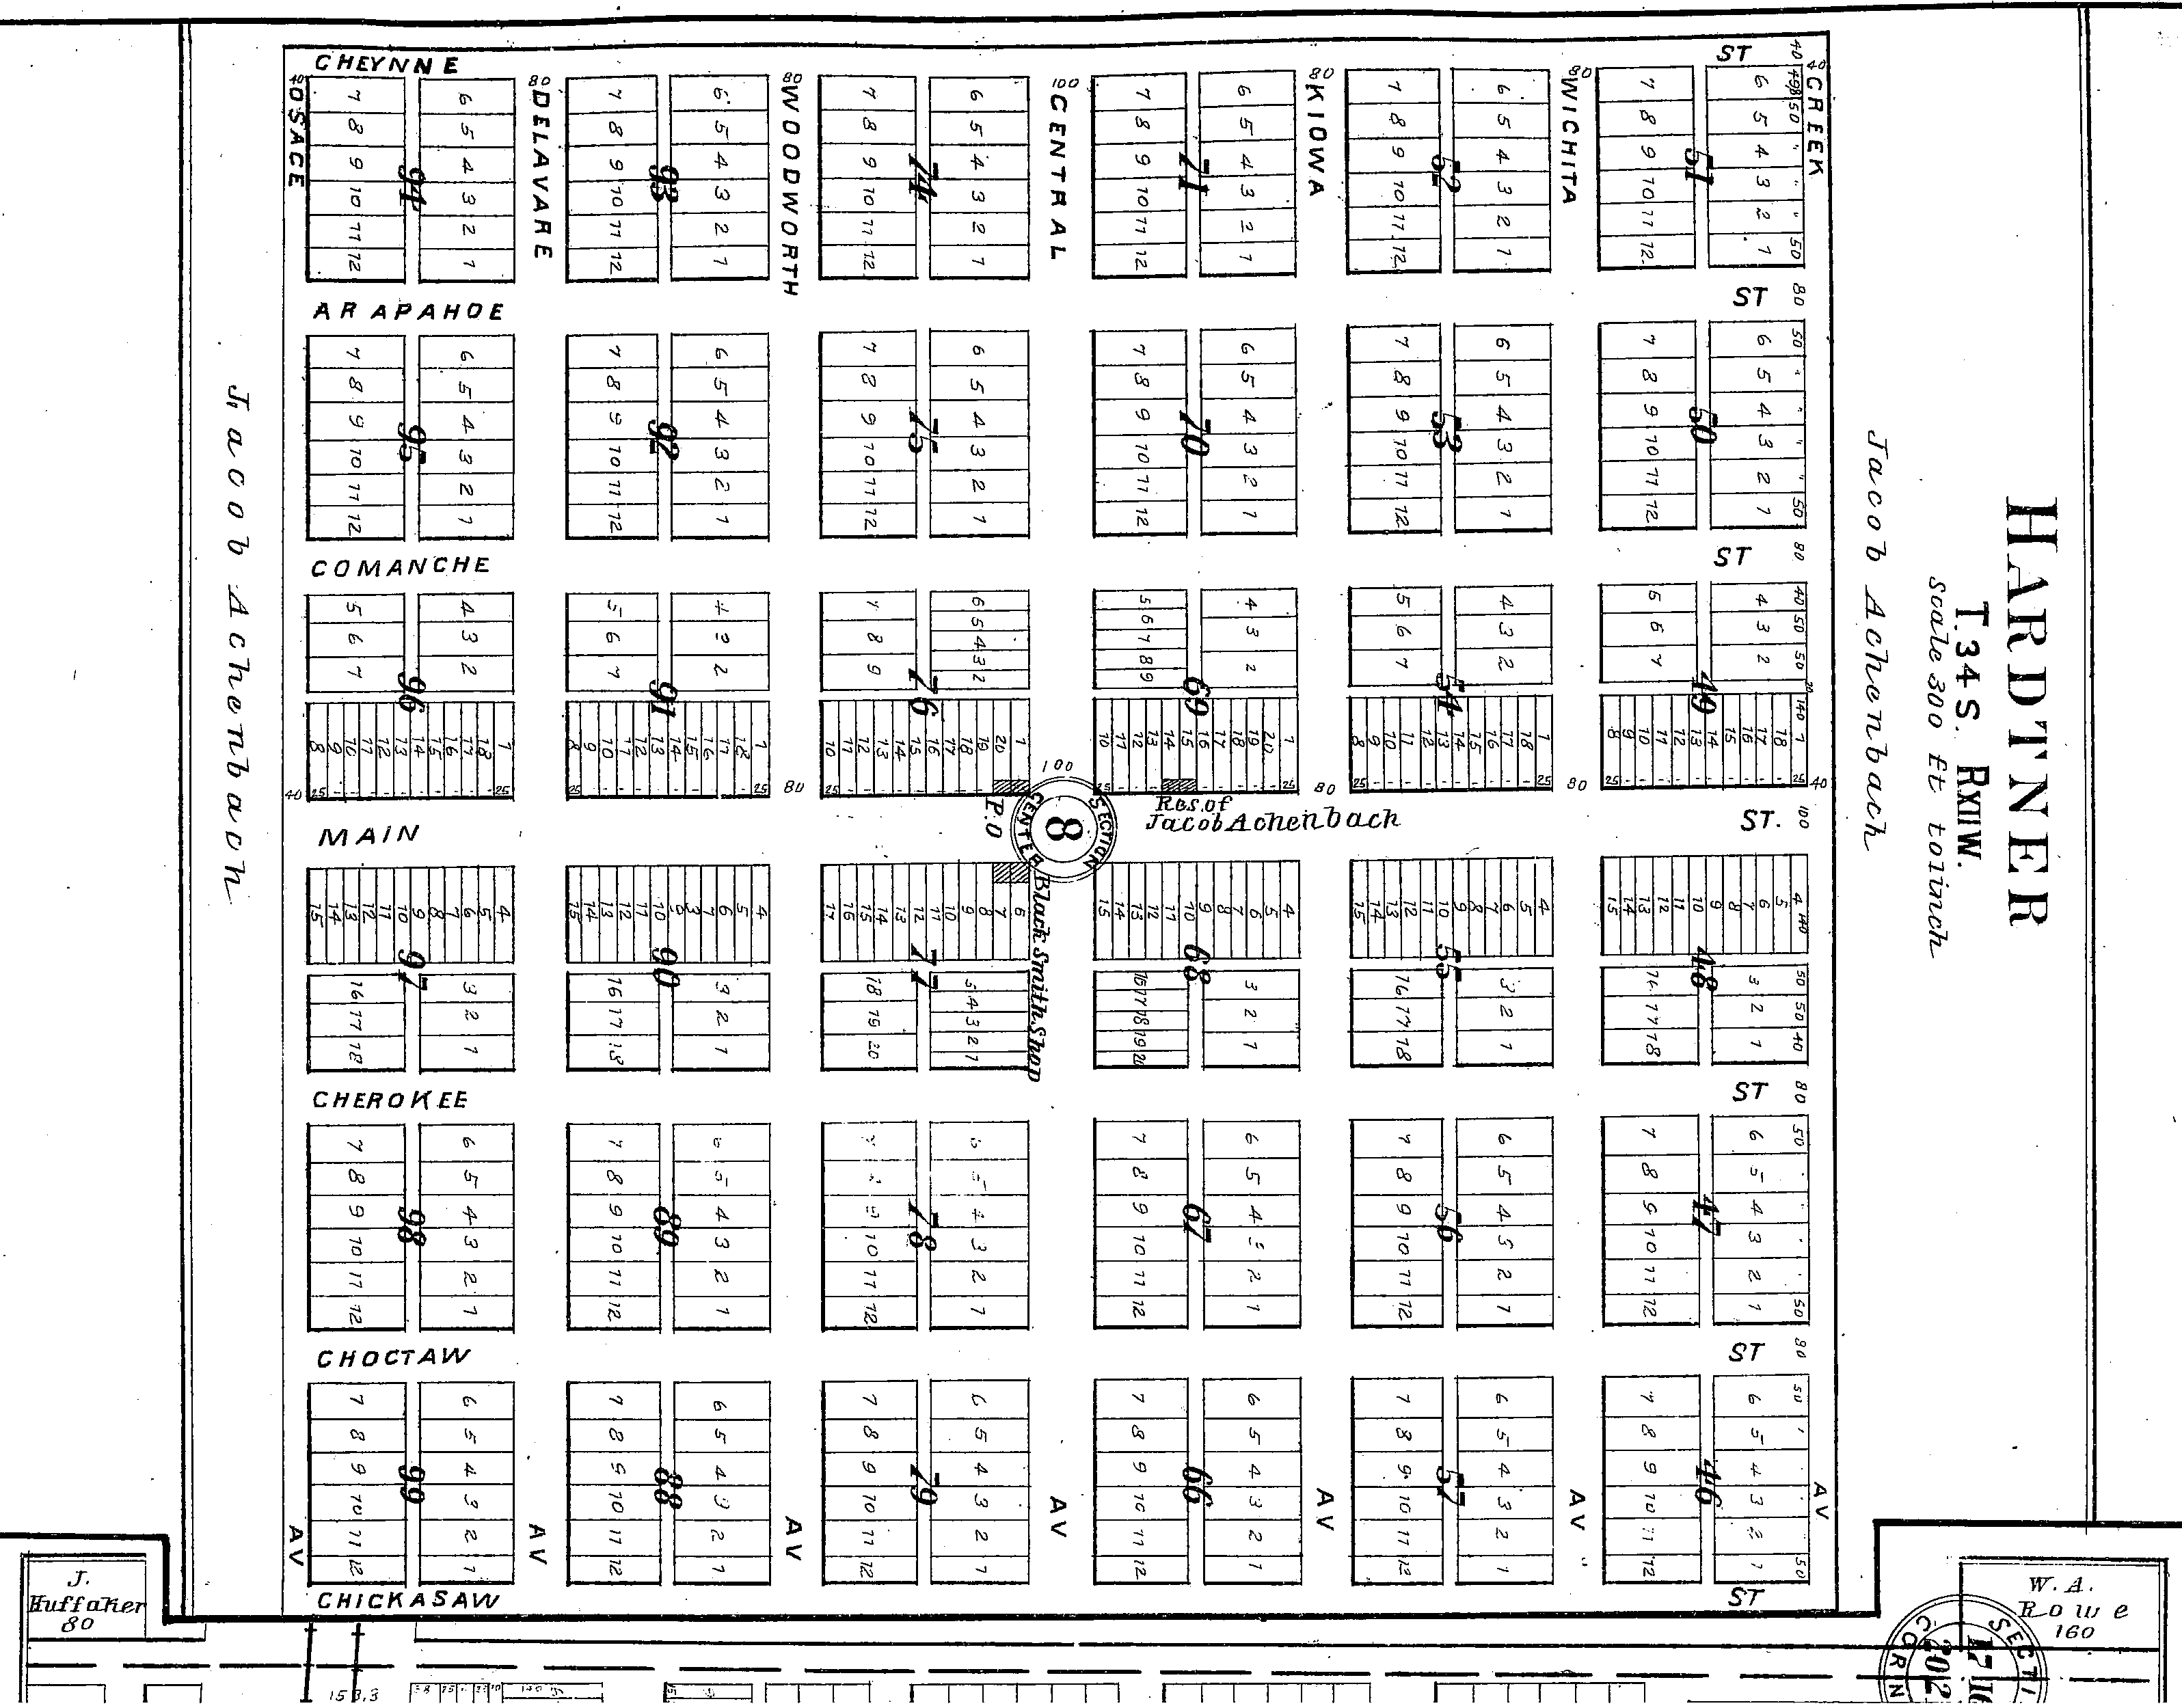 Plot Map of Hardtner, Barber County, Kansas. 

From the 'Standard Atlas of Barber County Kansas', 1905.

Map courtesy of Kimberly (Hoagland) Fowles.